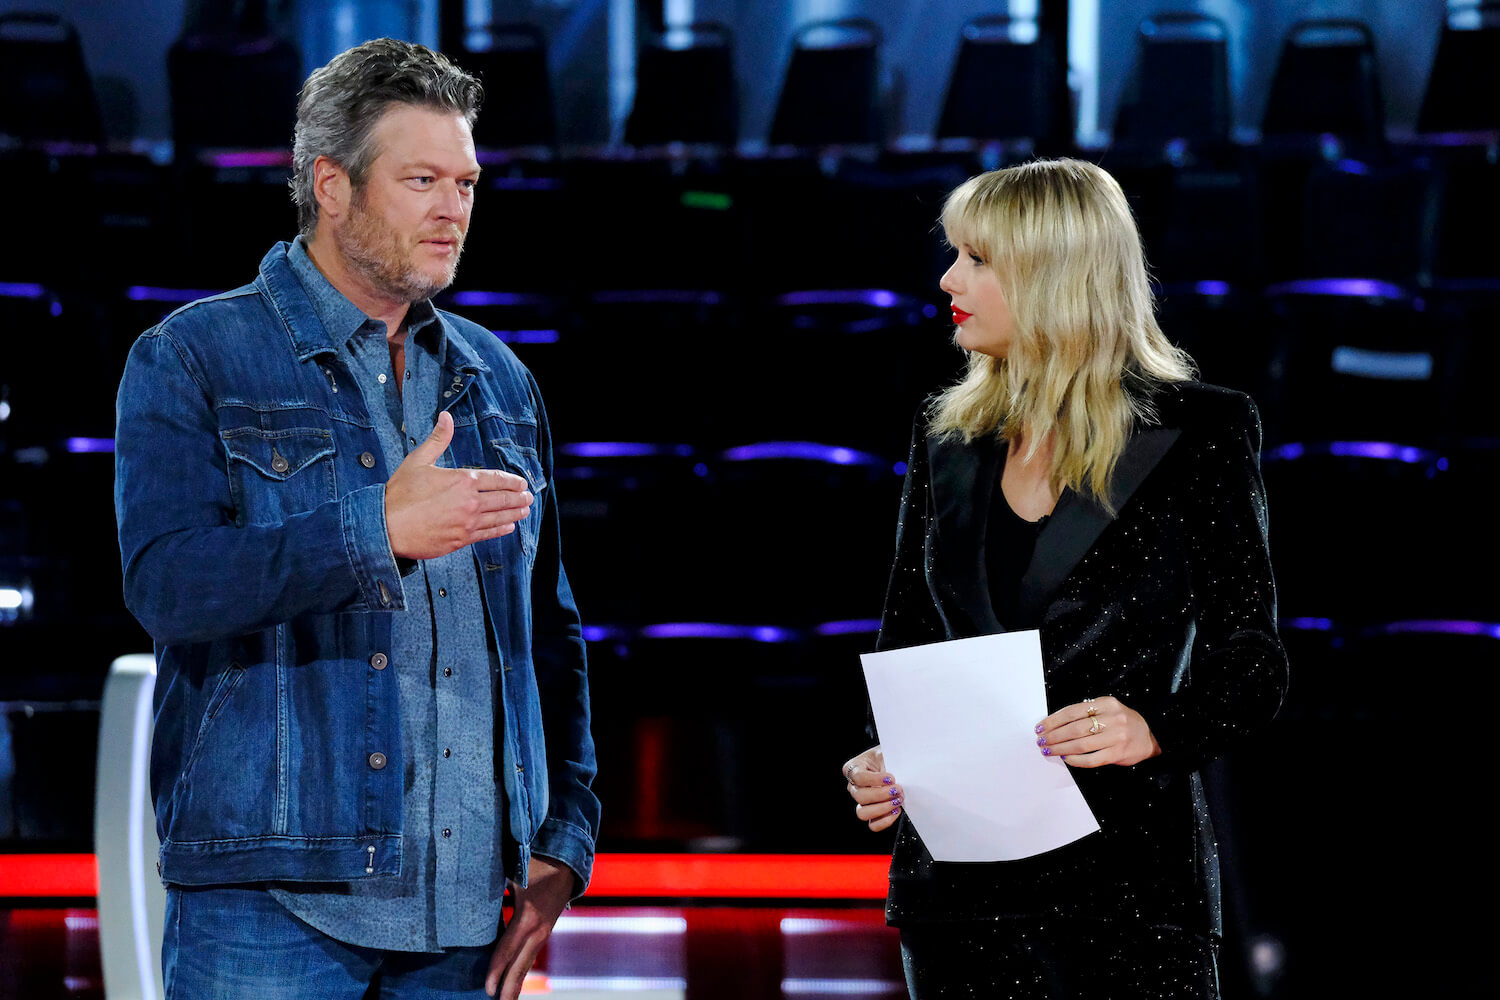 Blake Shelton speaking to Taylor Swift in 'The Voice' Season 17